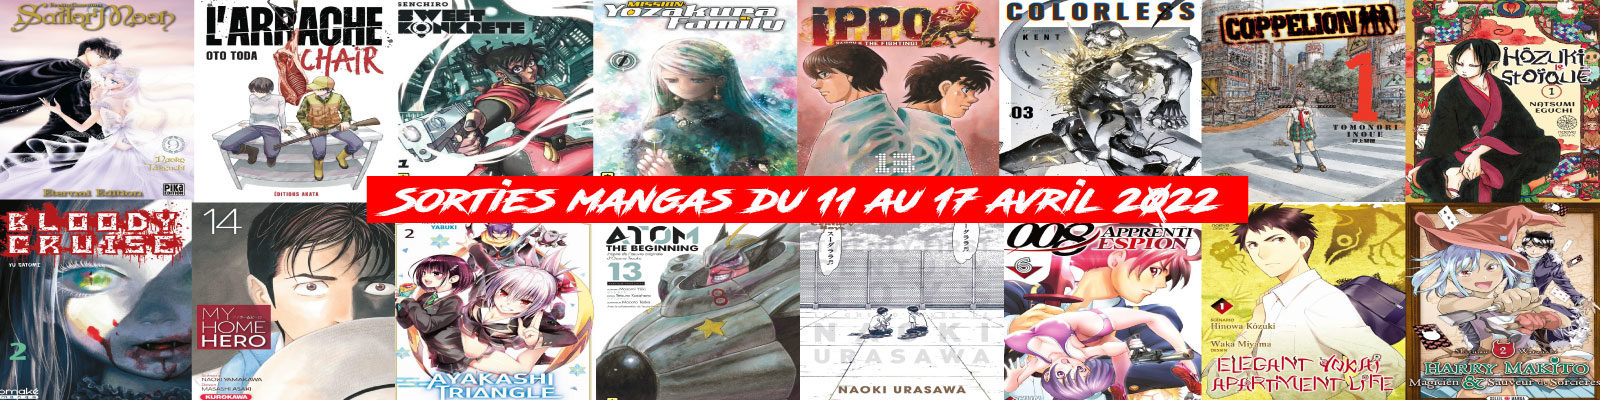 Sorties mangas-du-11-au-17-avril-2022-2